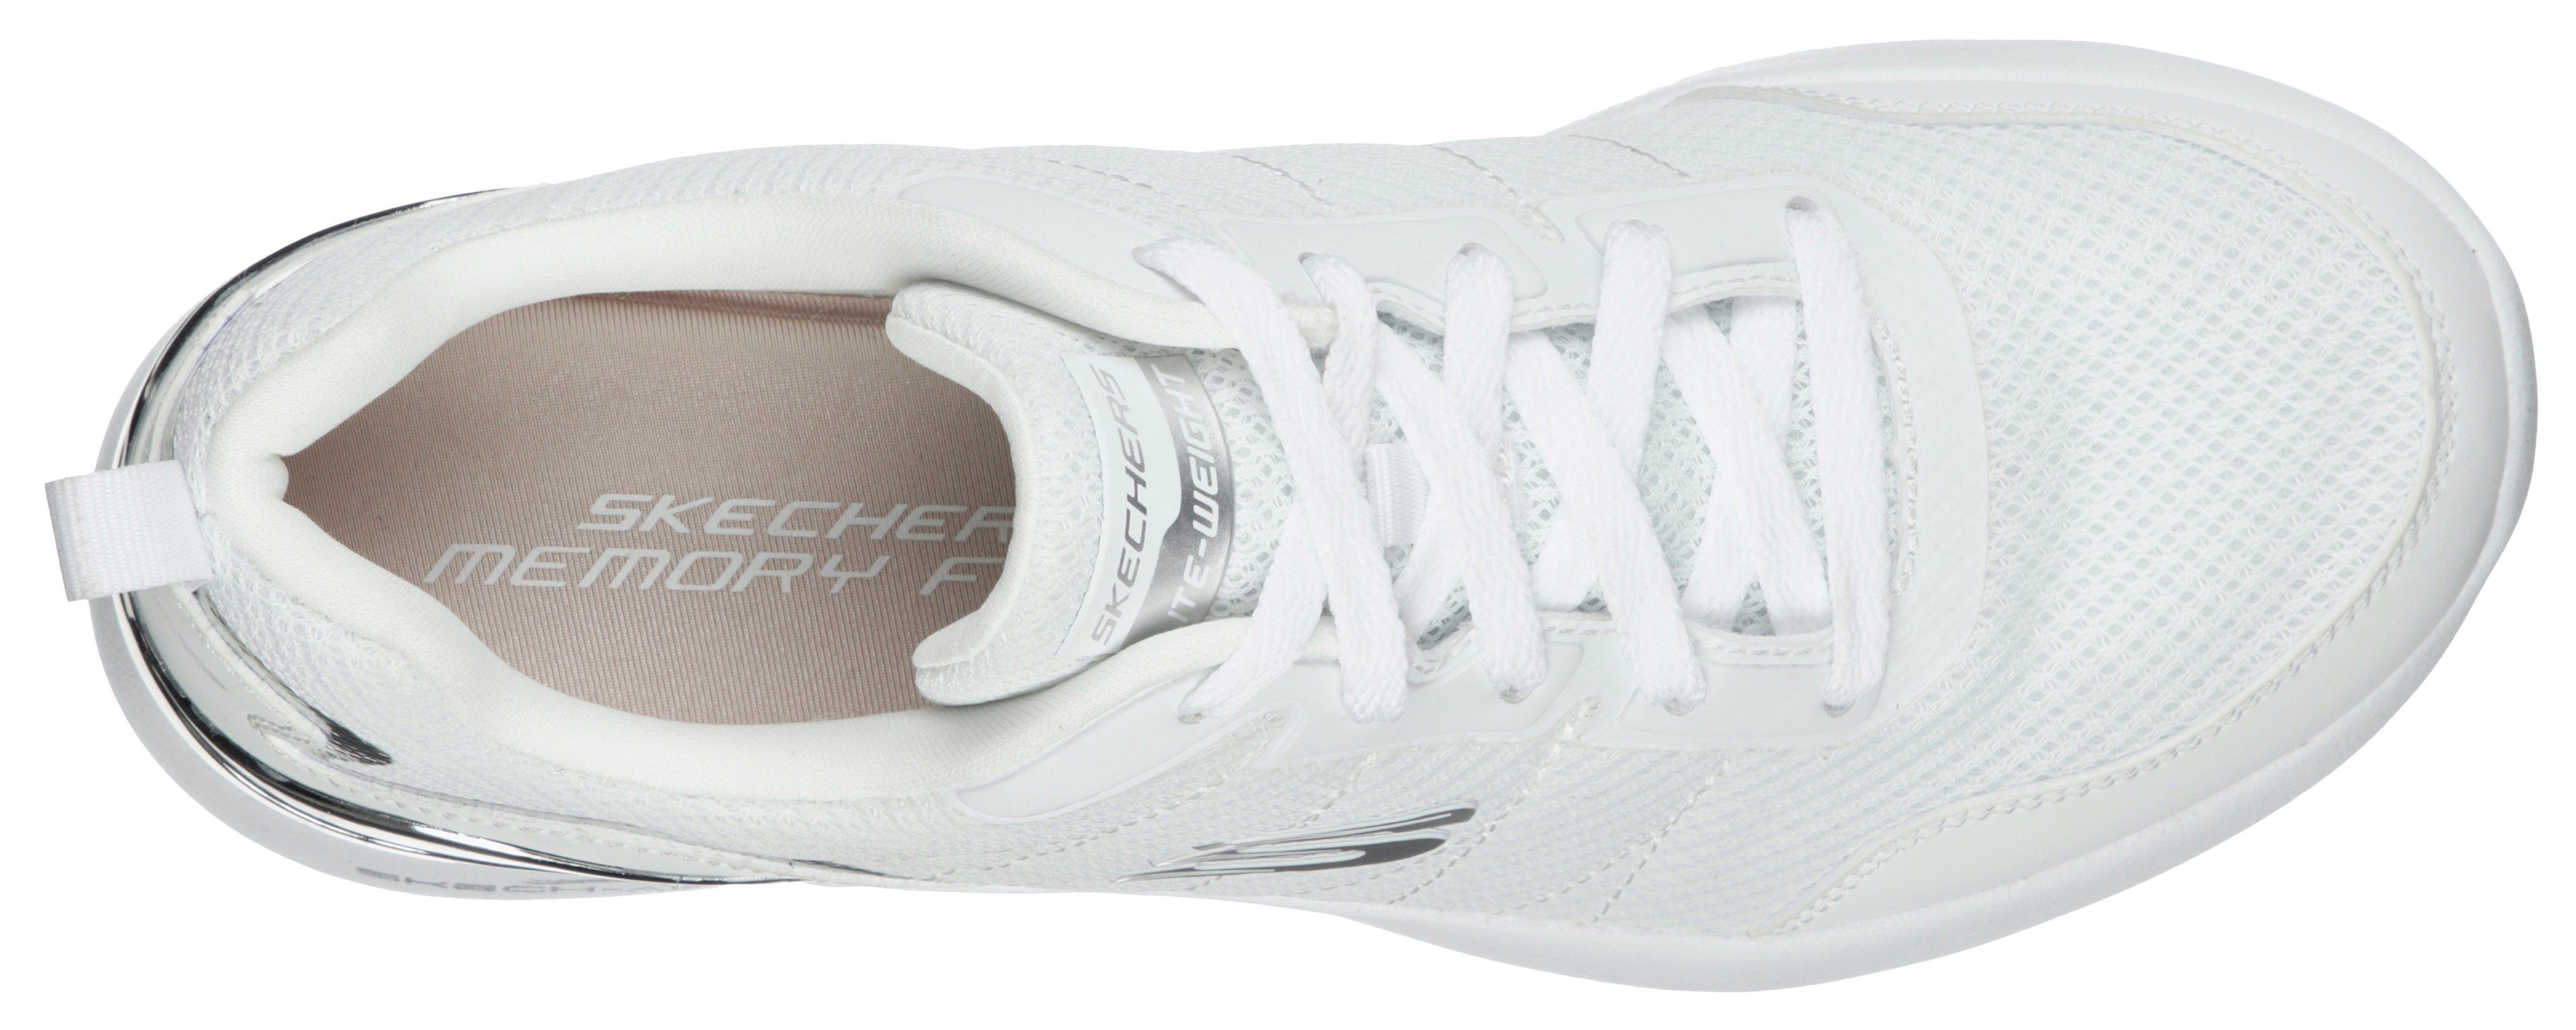 DYNAMIGHT Metallic-Details Skechers mit SKECH-AIR Sneaker weiß